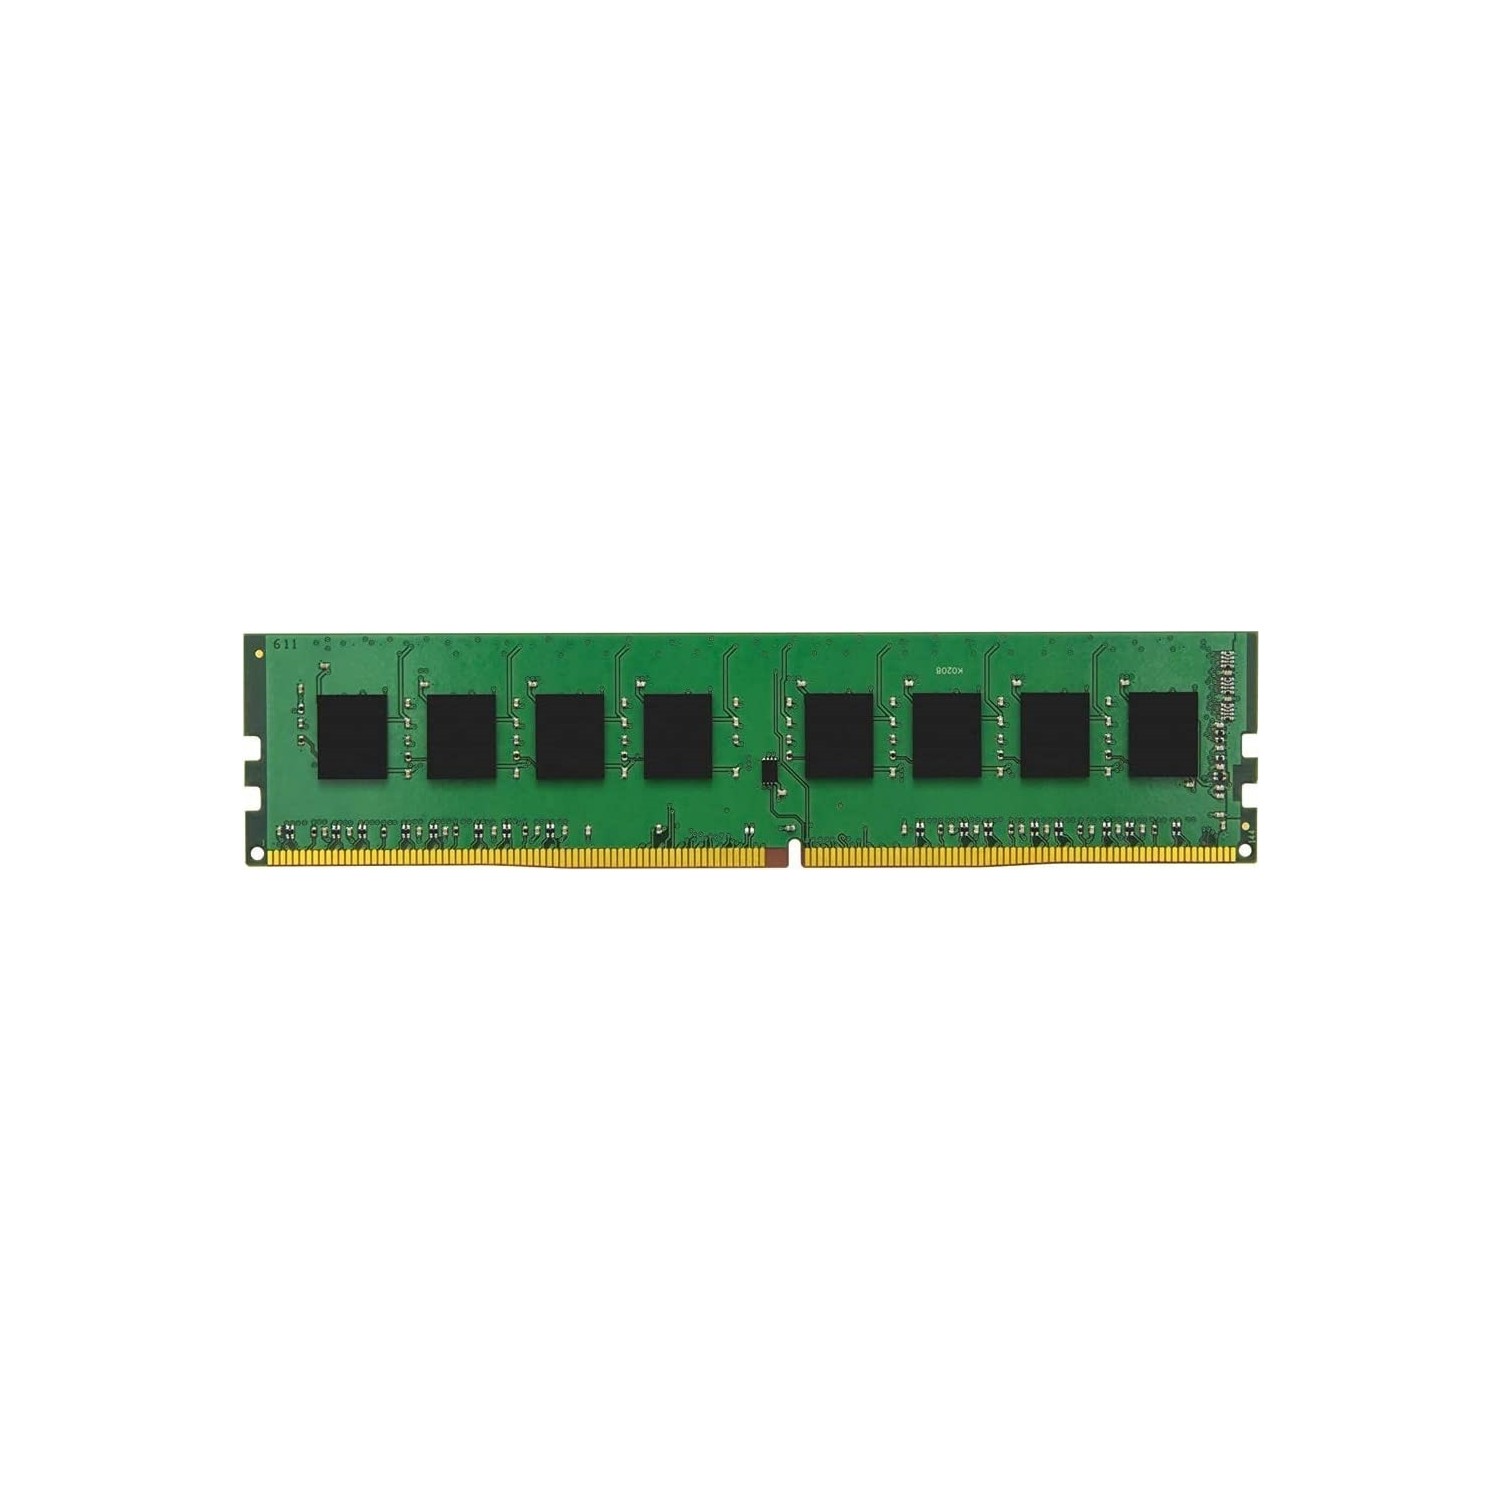 KINGSTON 16GB 3200MHZ DDR4 13200MHZ CL22 RAM KVR32N22D8/16